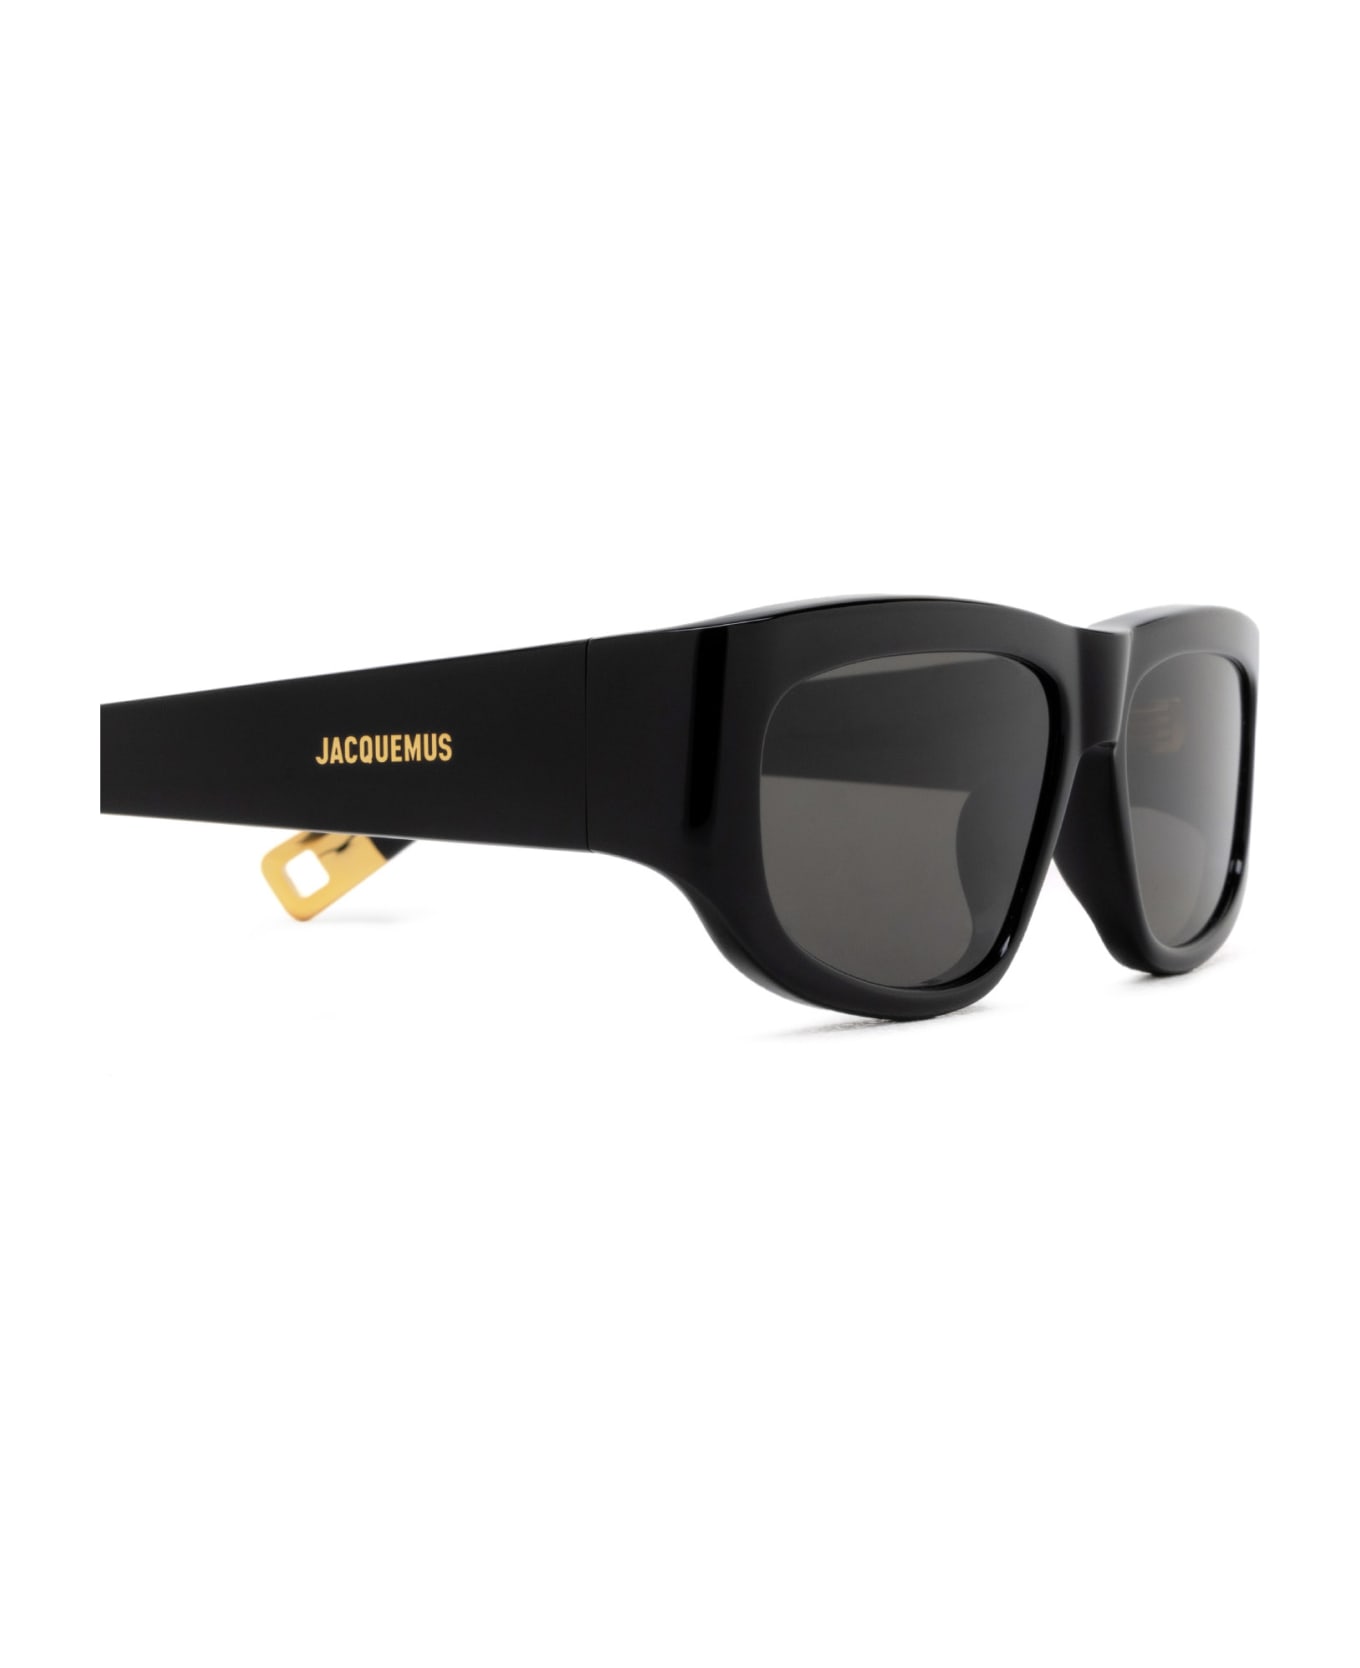 Jacquemus Jac2 Black Sunglasses - Black